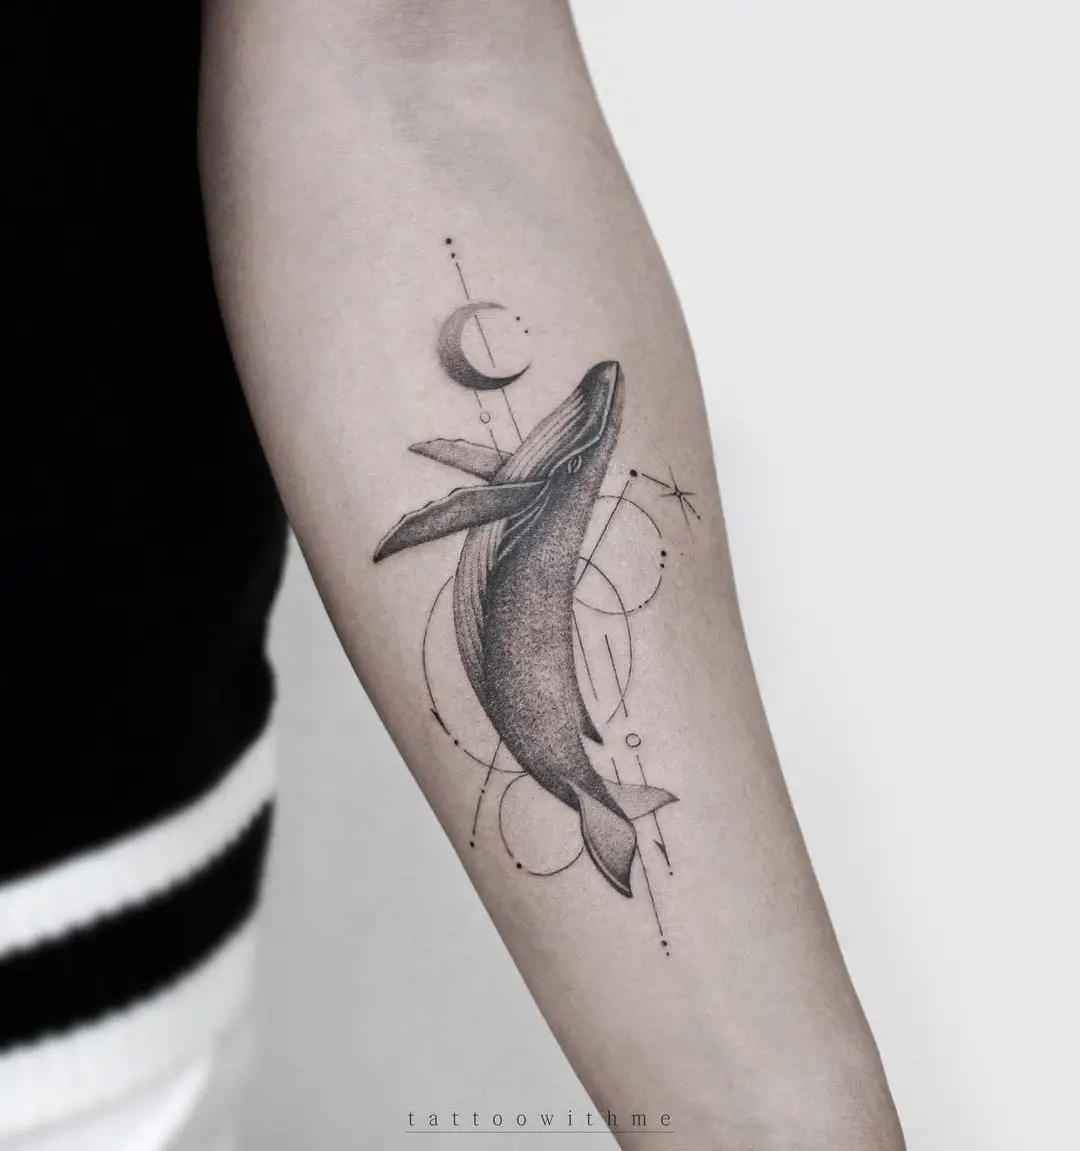 Geometric whale tattoo by tattoowithme